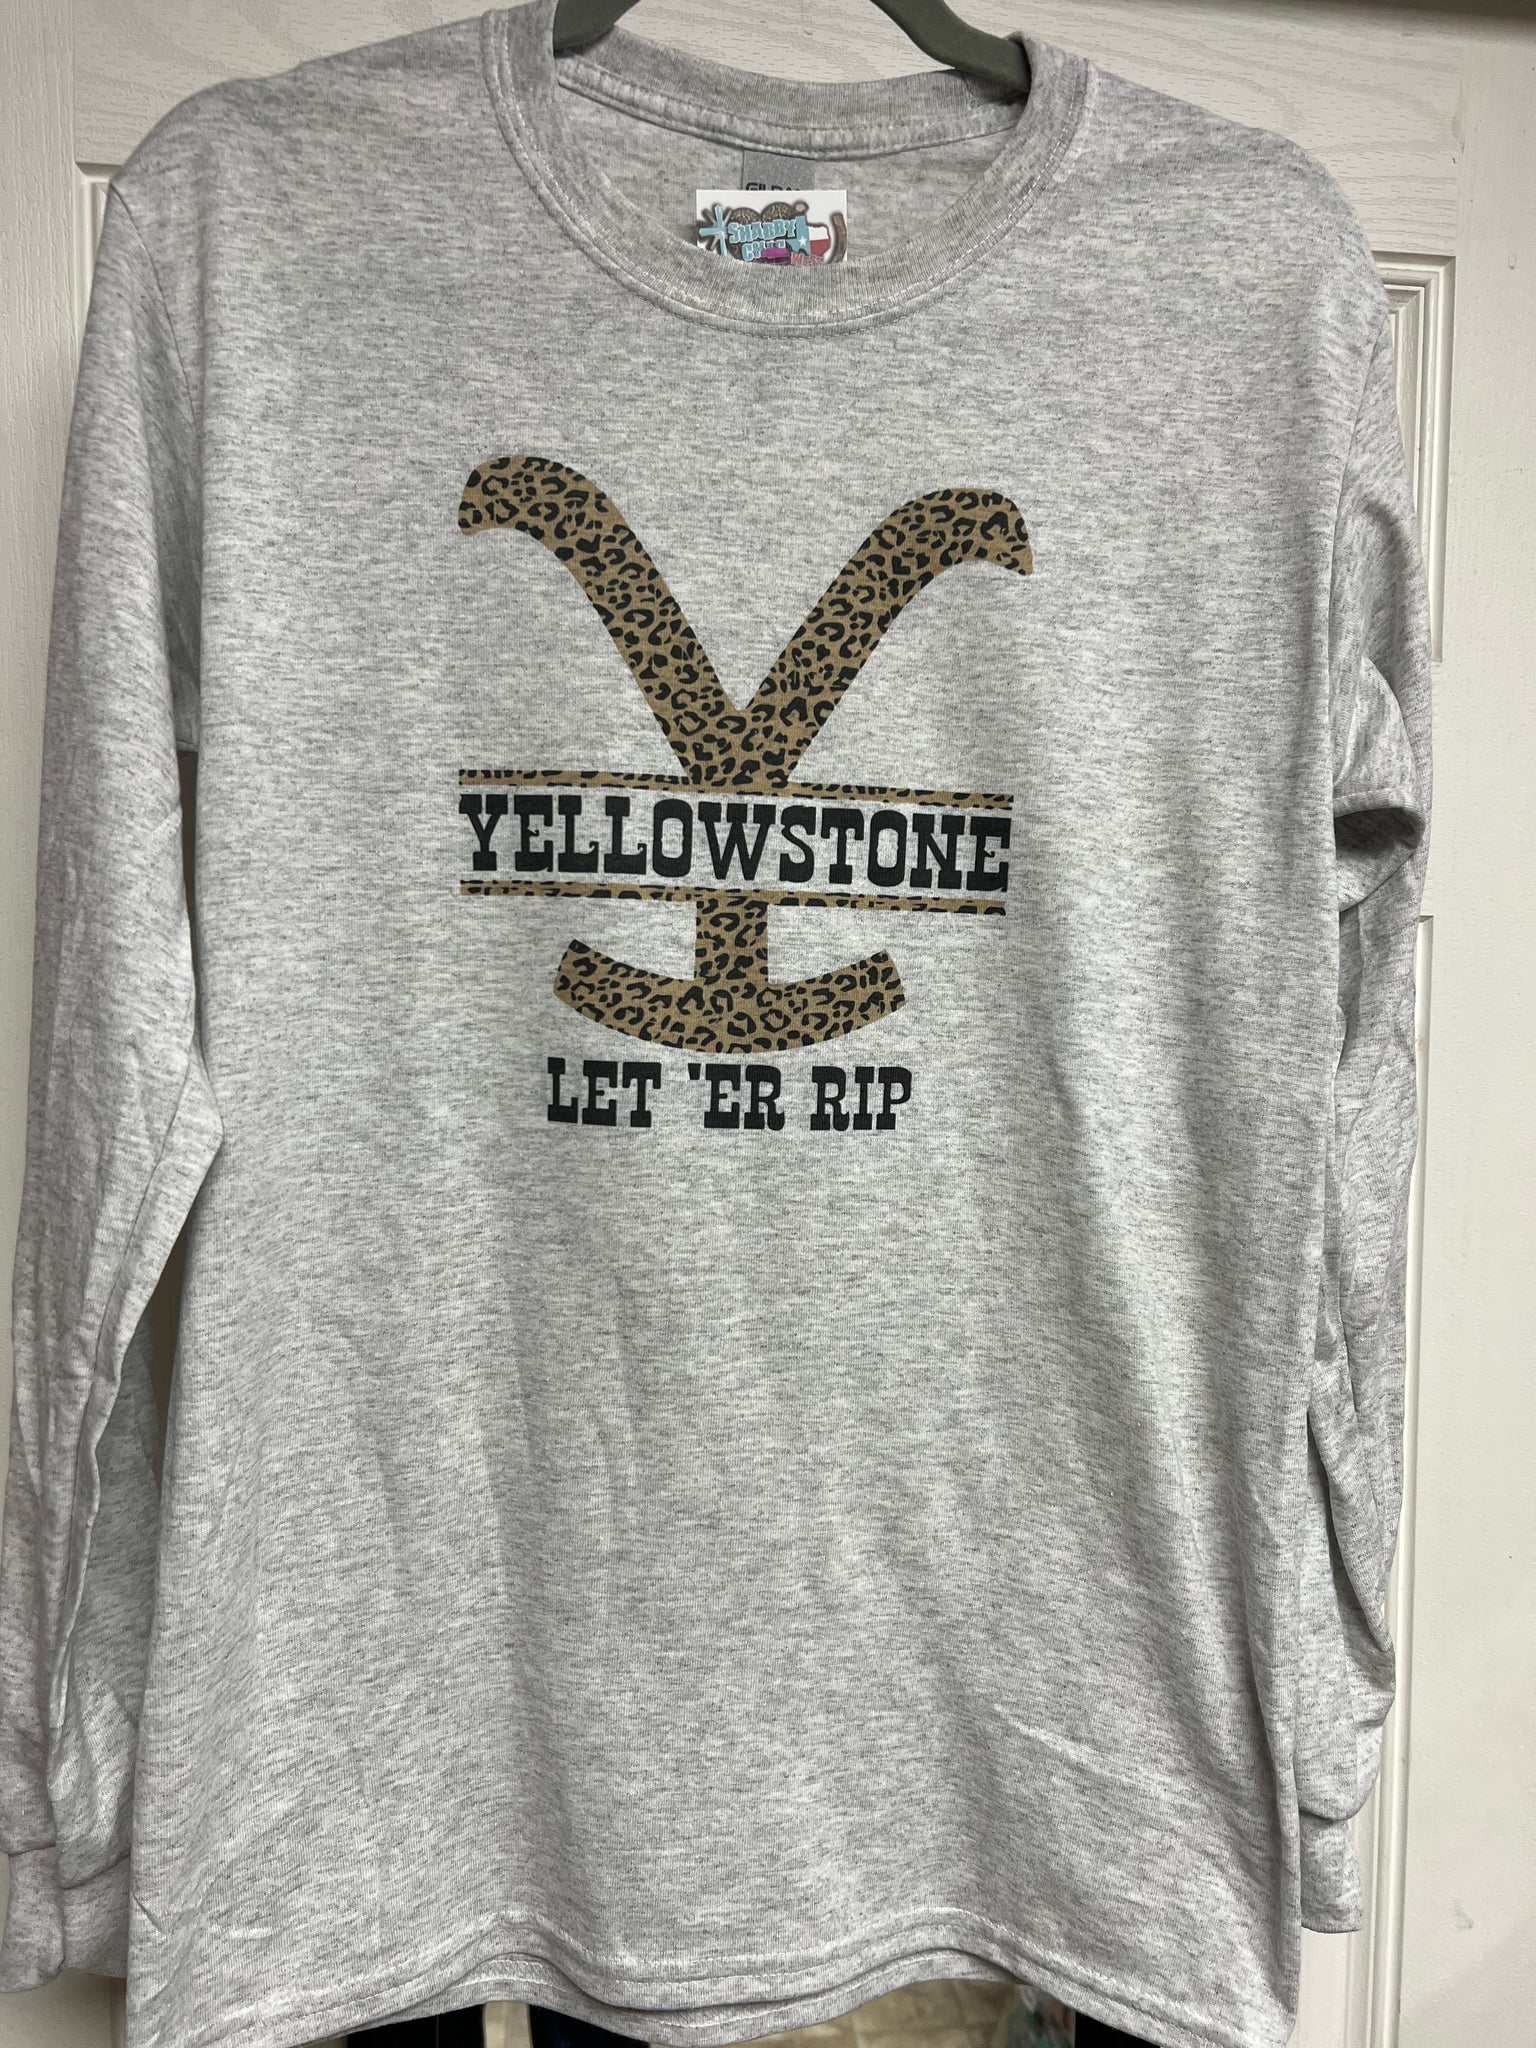 Grey Yellowstone Graphic Tshirt Long Sleeve